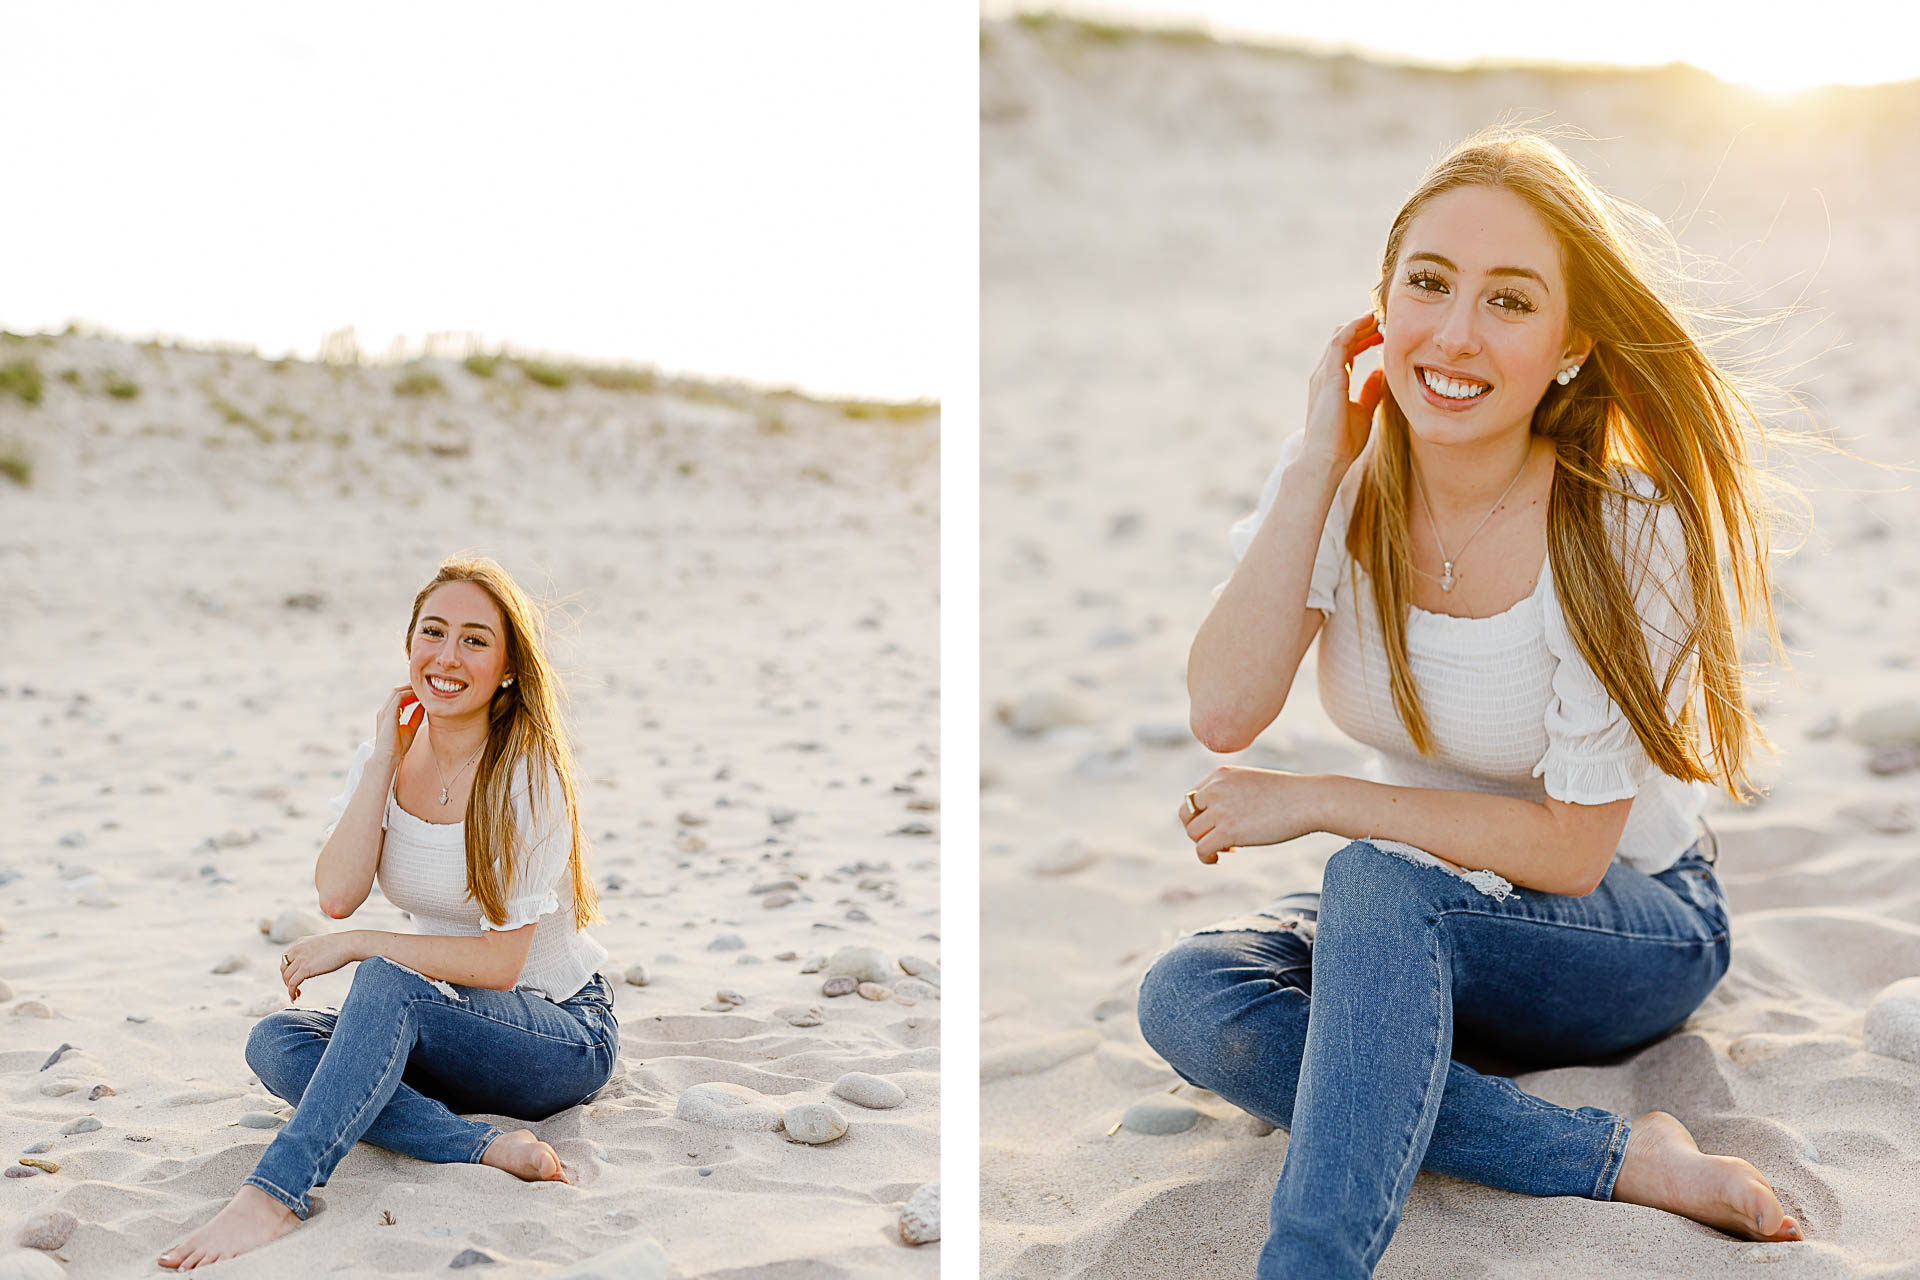 Photos by Arlington senior portrait photographer Christina Runnals | Girl sitting in the sand